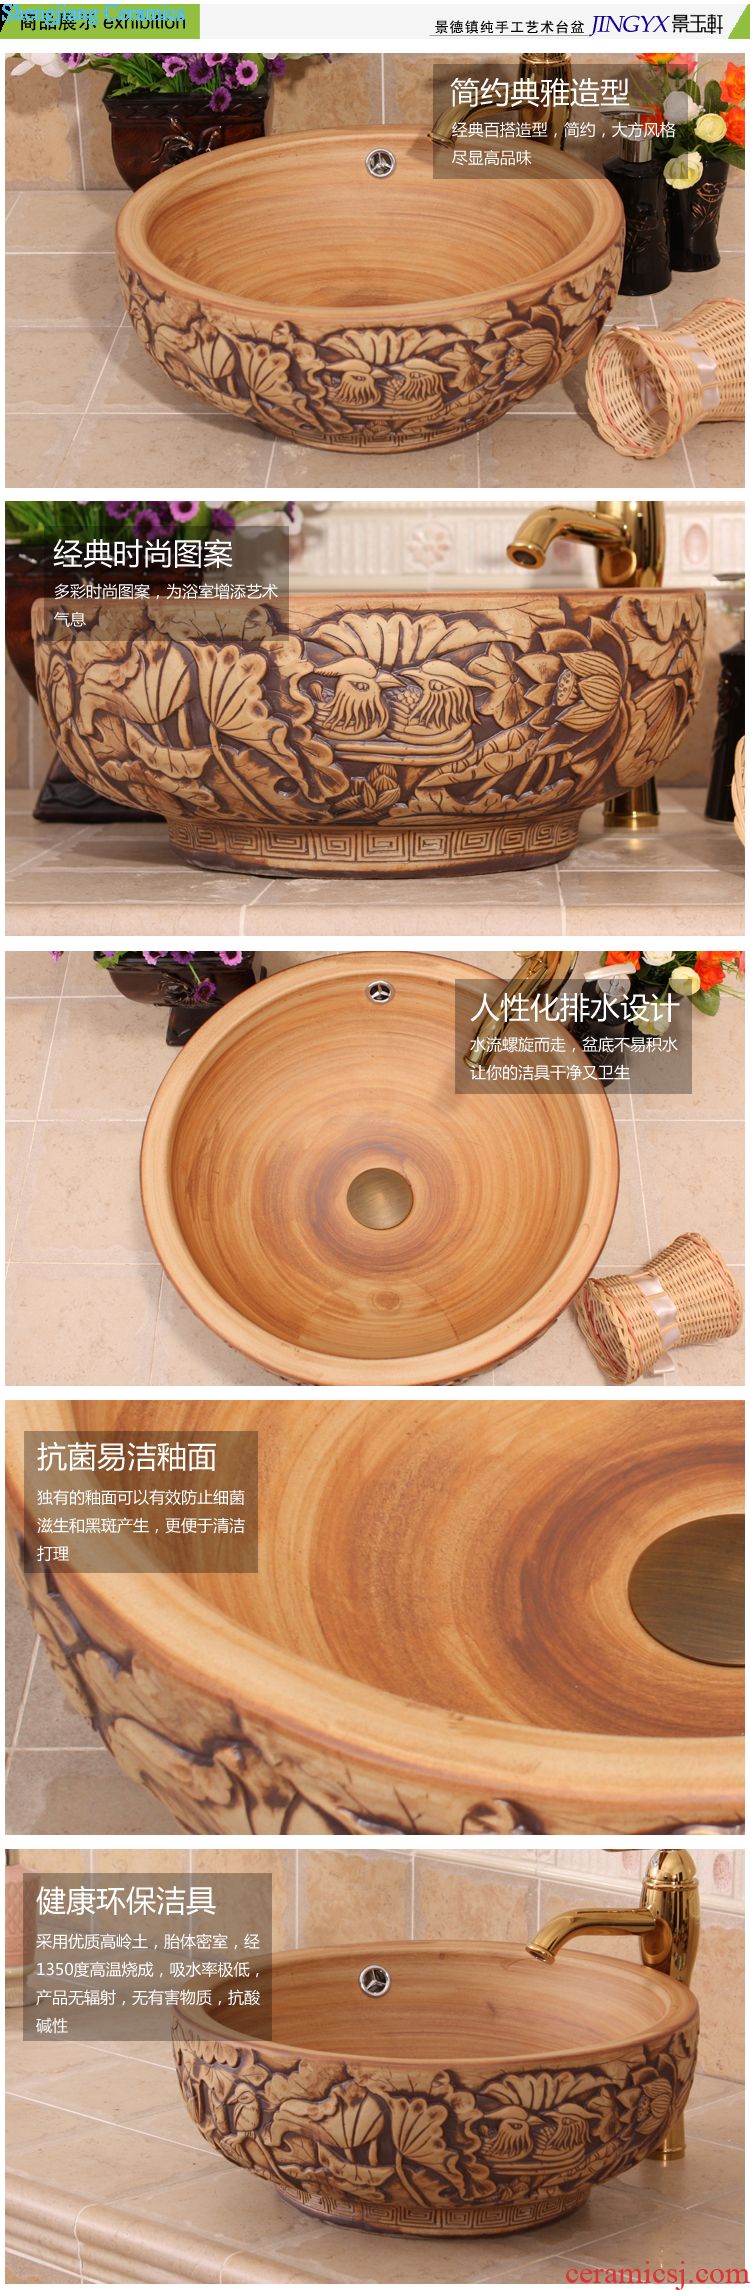 Jingdezhen ceramic lavatory basin basin art on the sink basin basin admiralty imitation stone white lotus